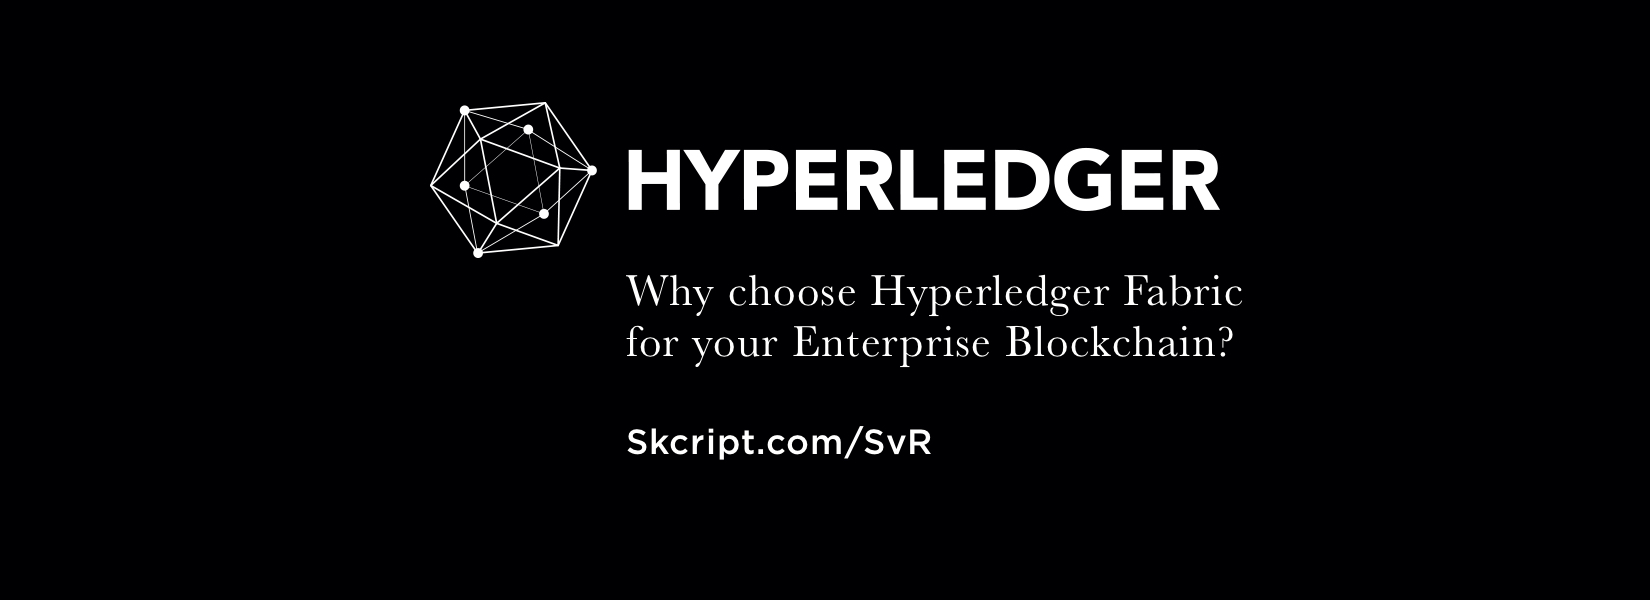 5 advantages of using Hyperledger Fabric for your Enterprise Blockchain